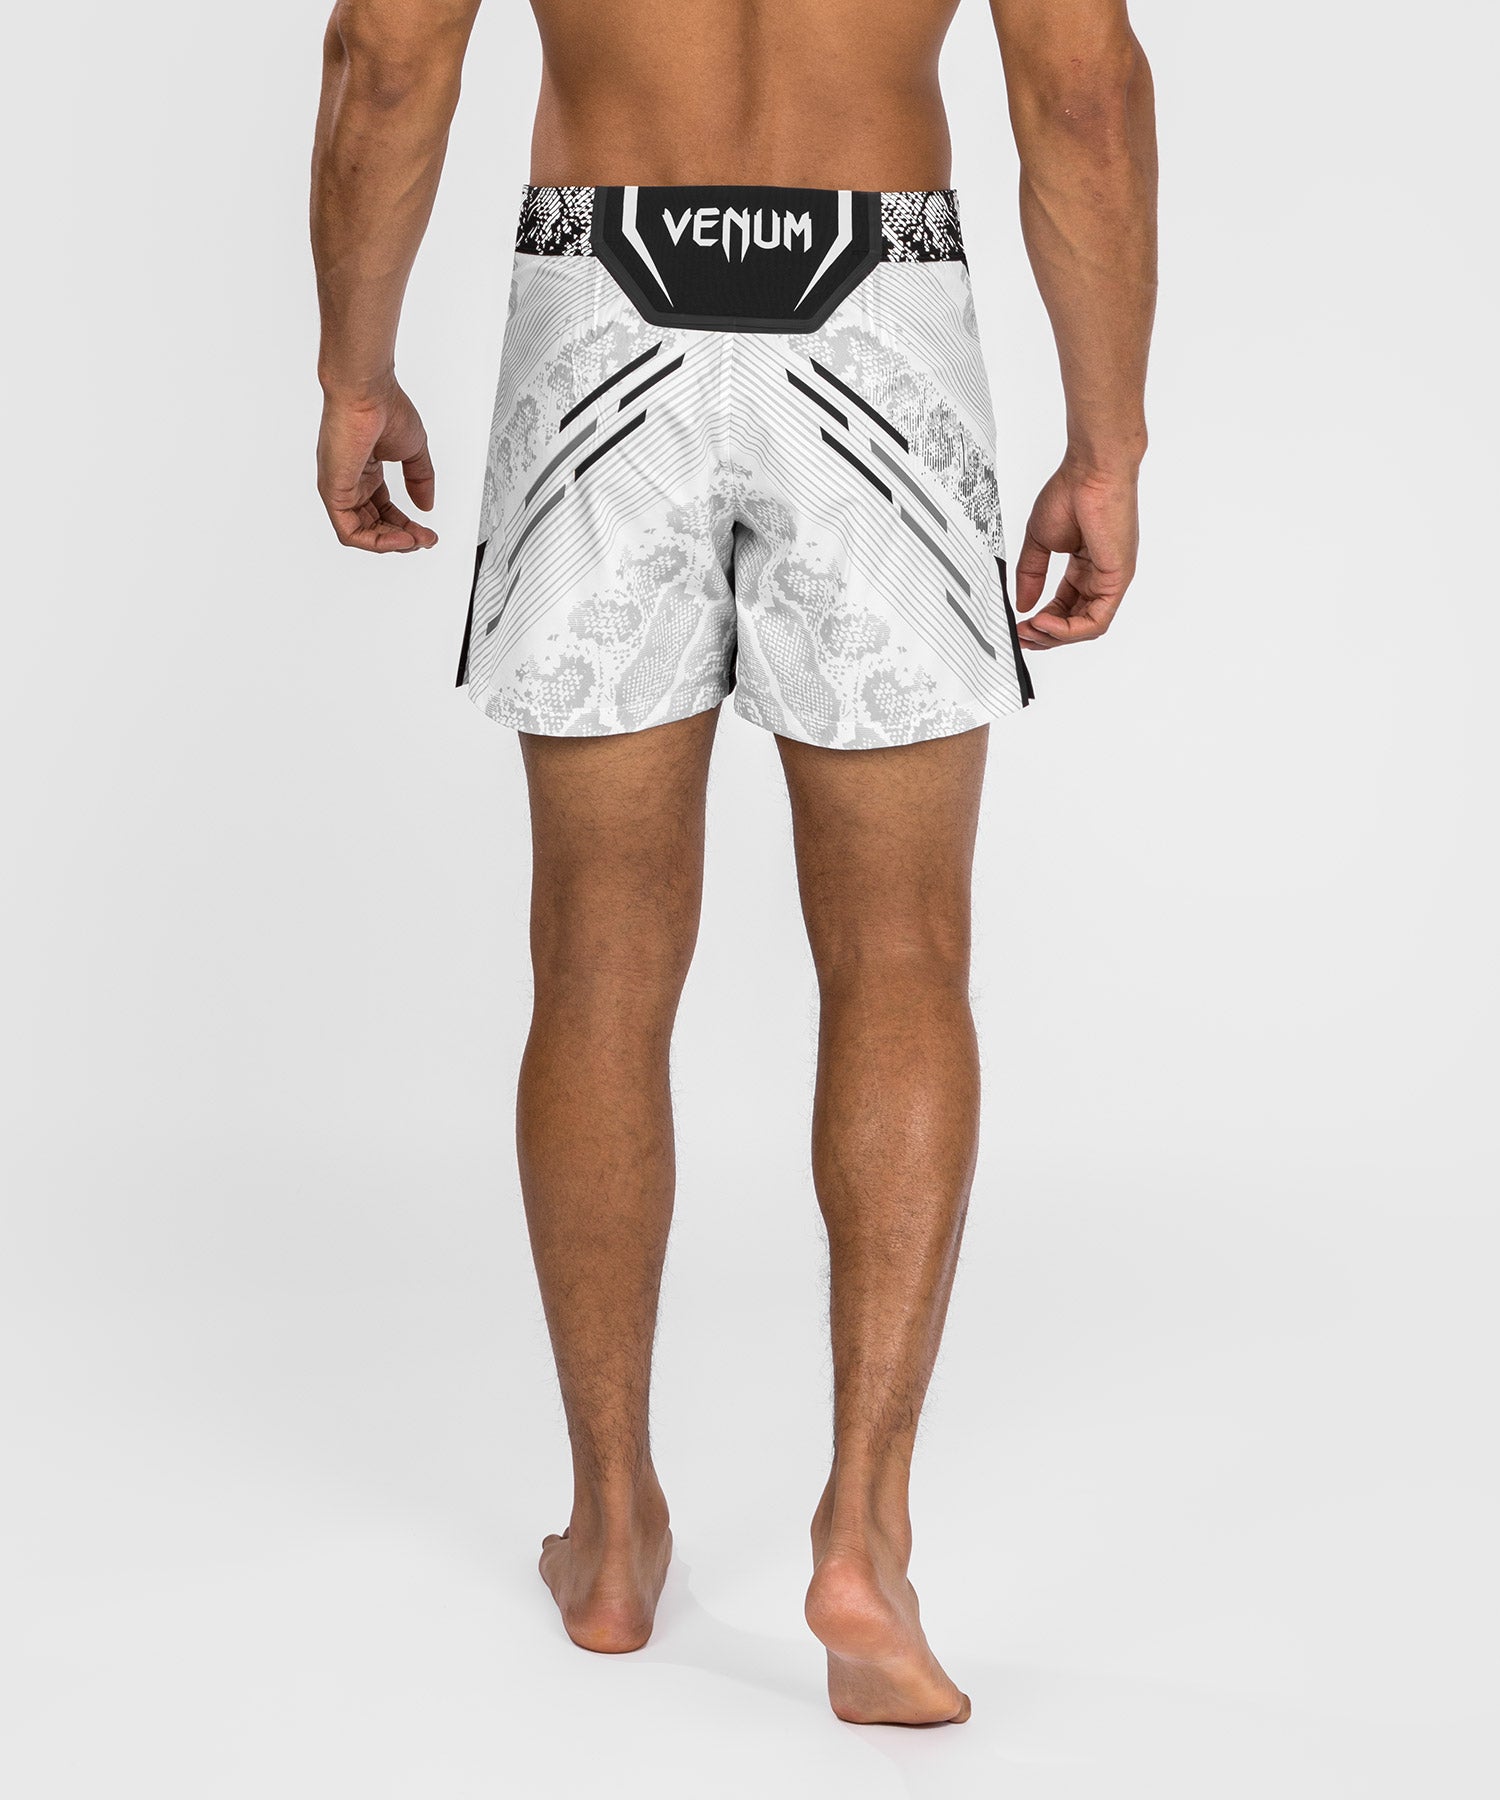 UFC Adrenaline by Venum Authentic Fight Night Men's Fight Short - Short Fit  - White